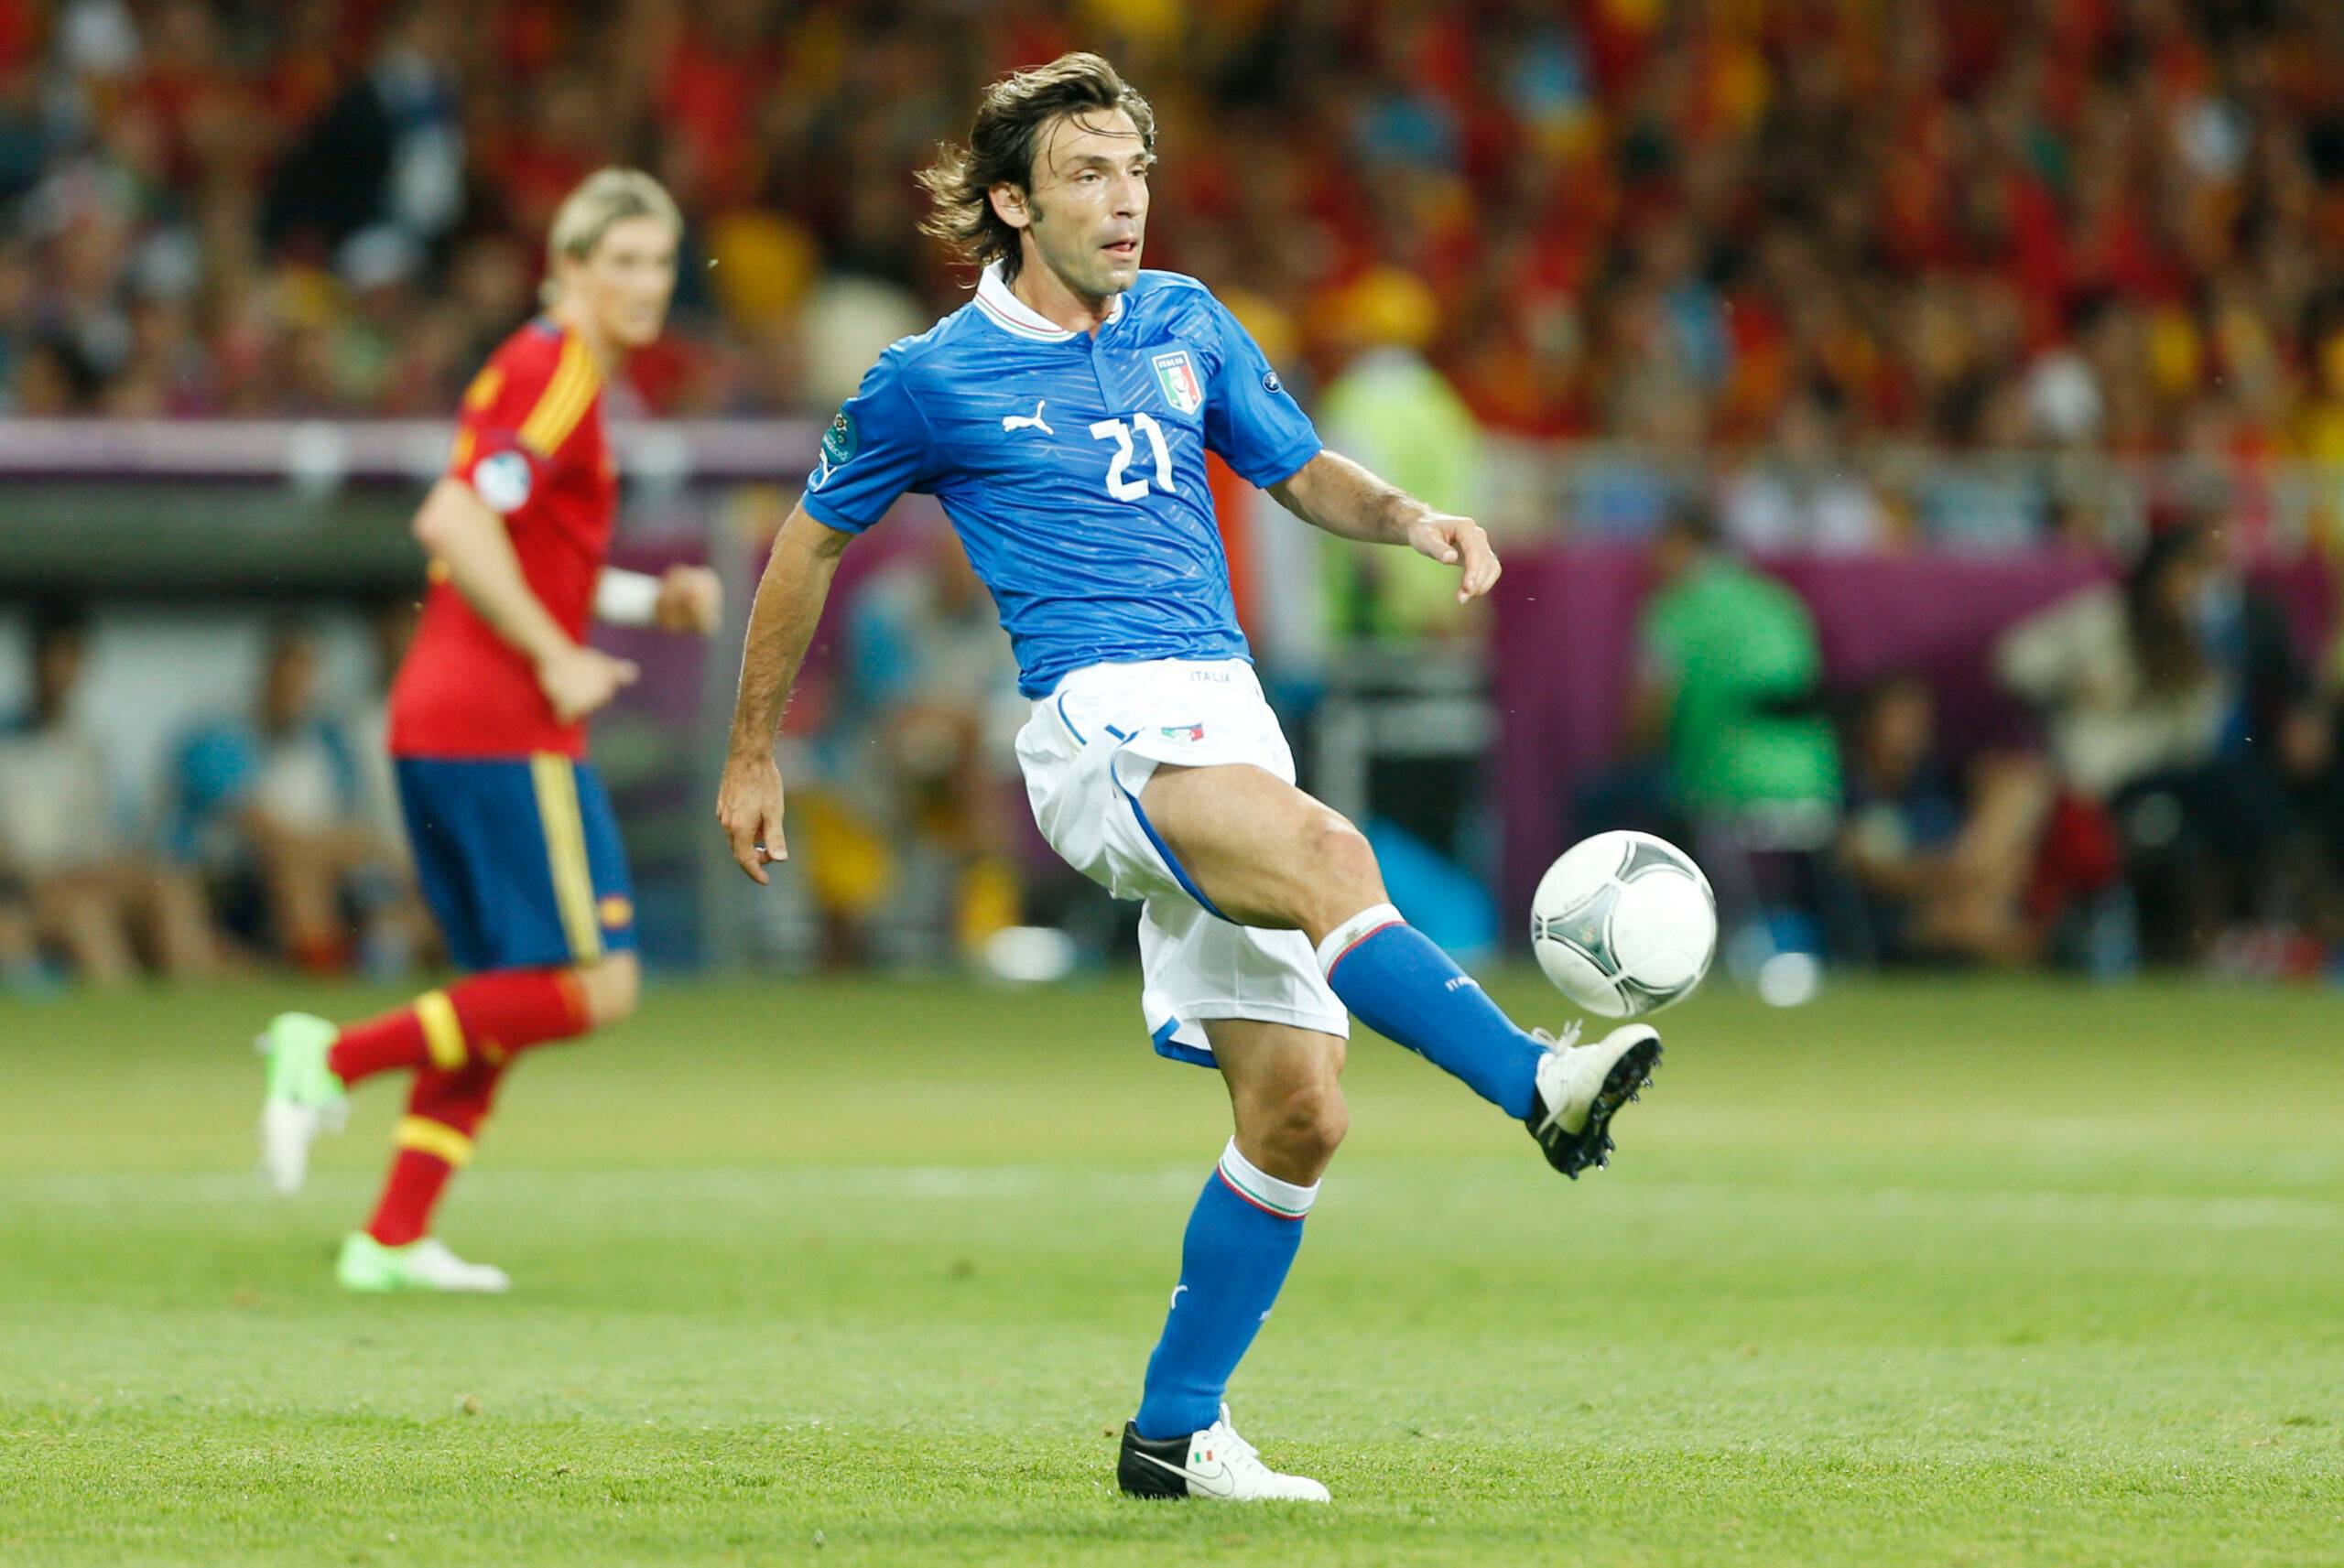 Pirlo balling foor Italy.